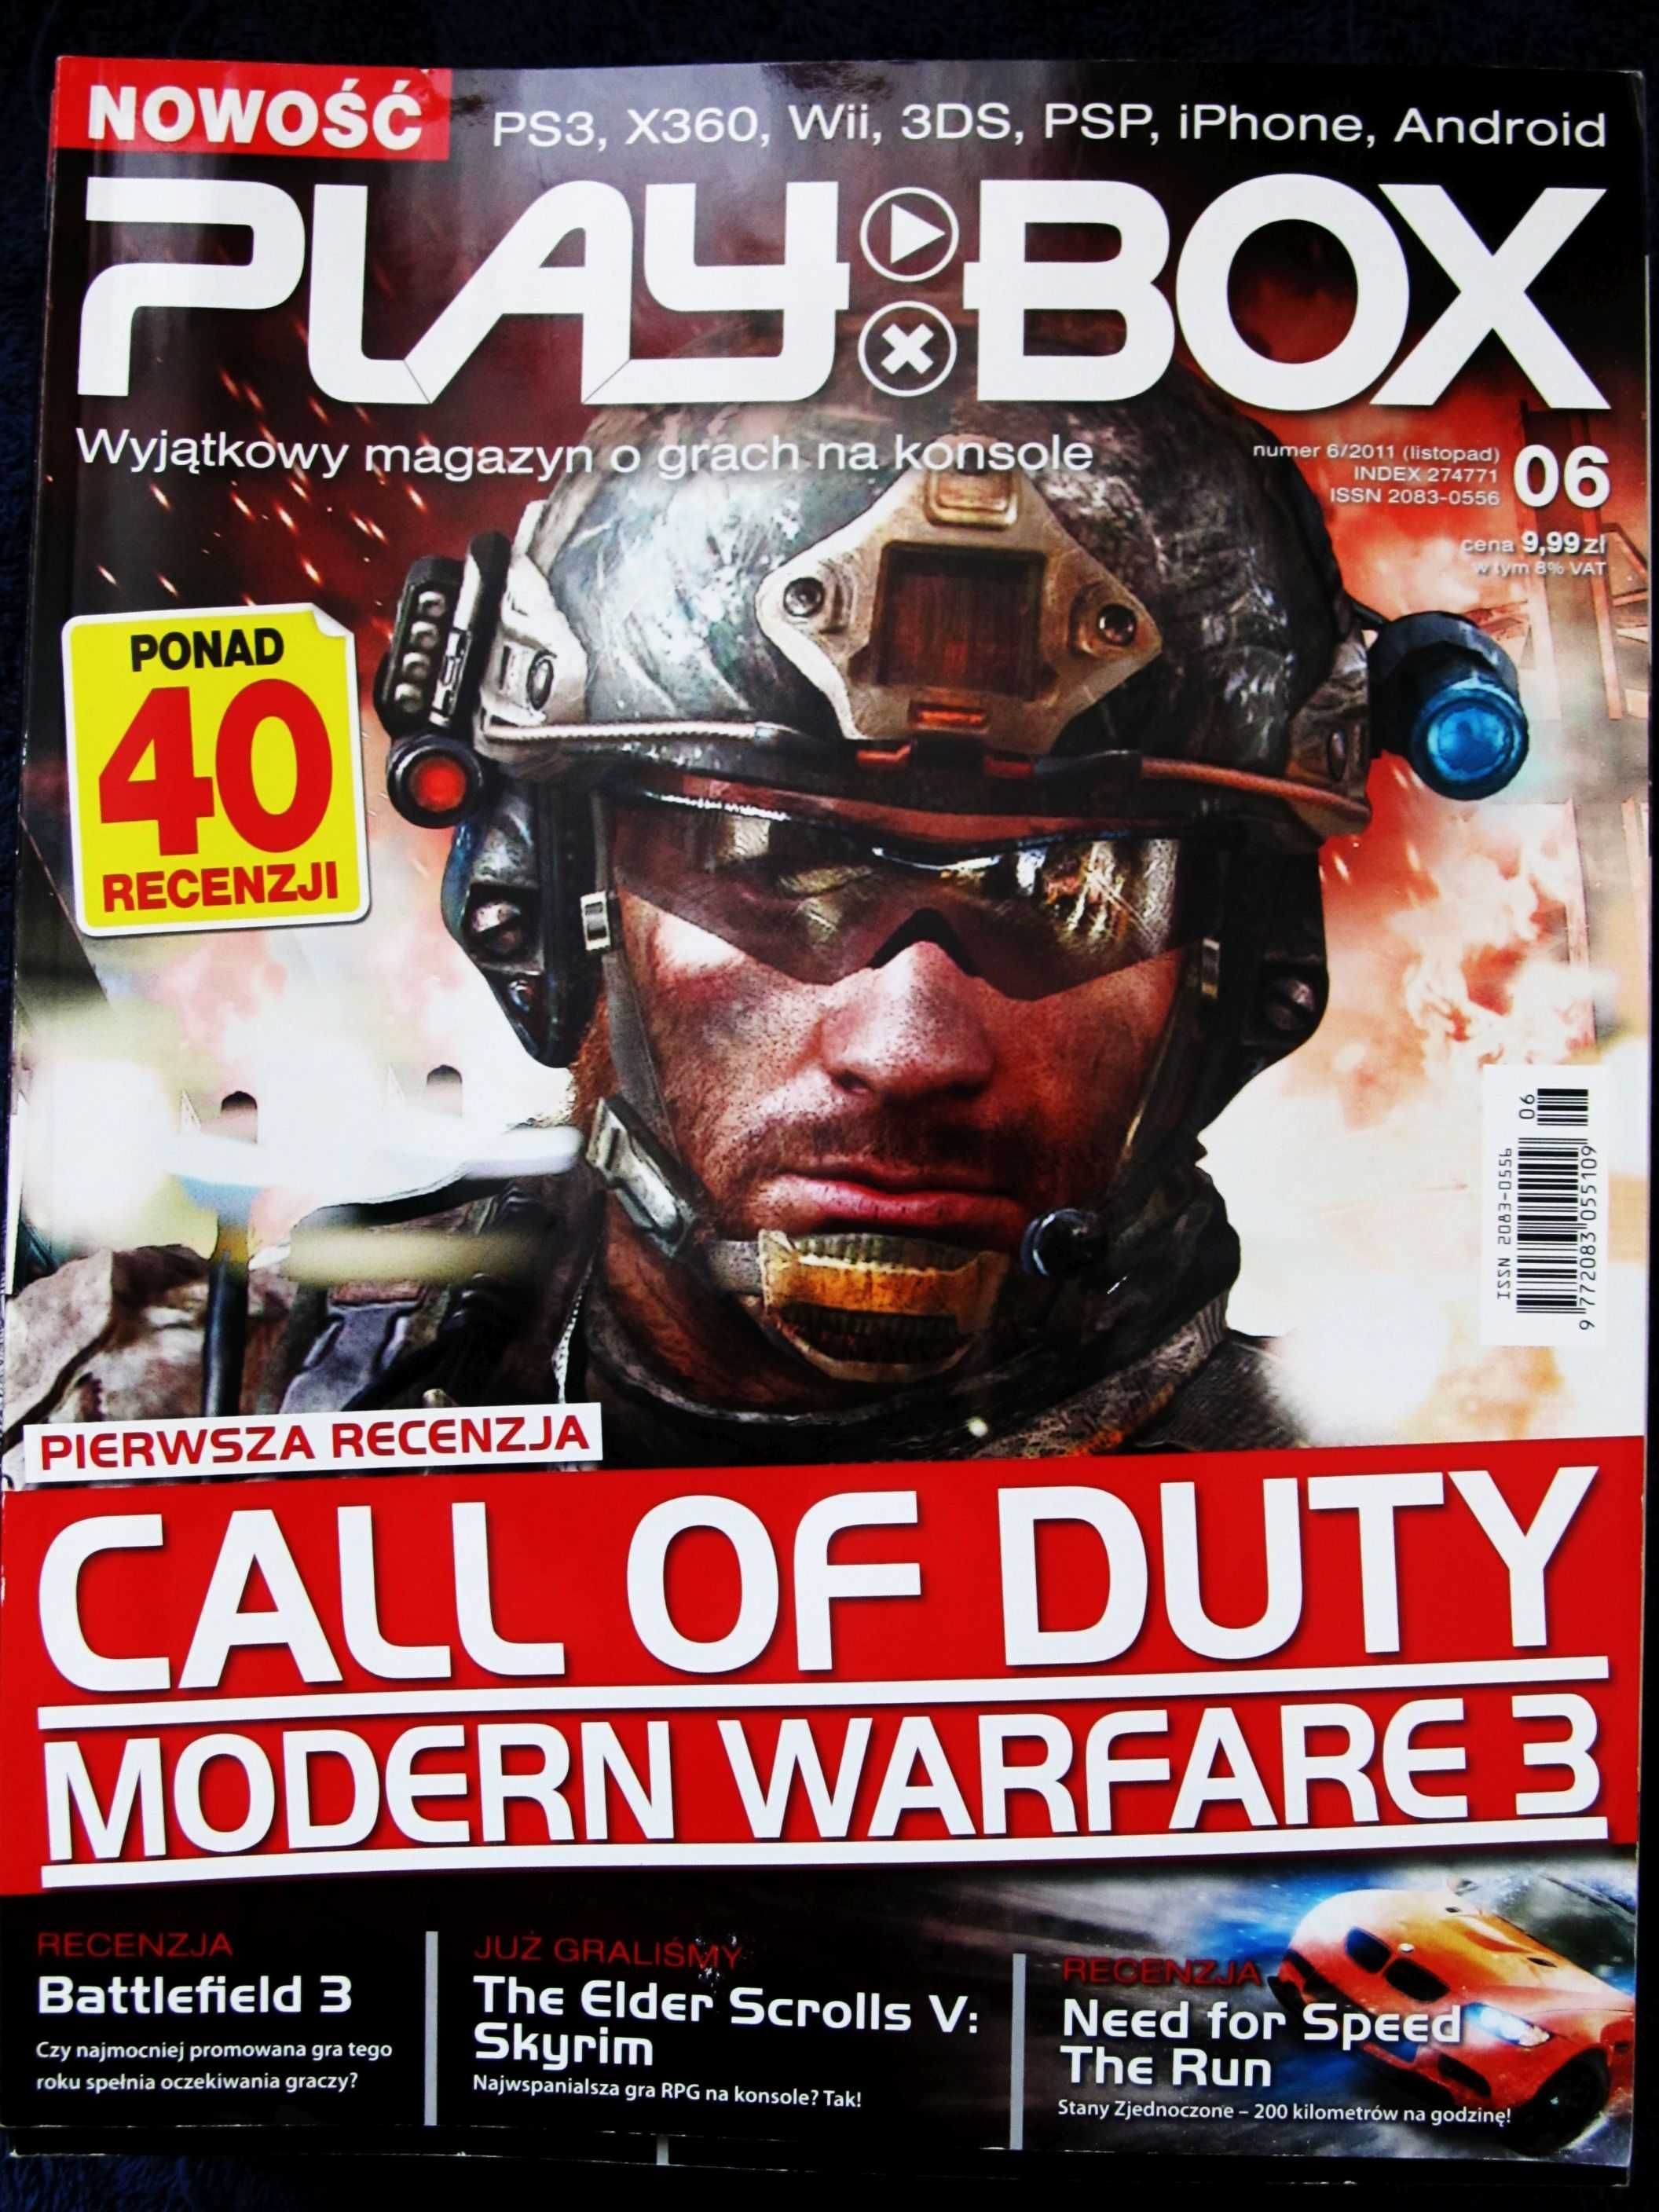 Play Box 6/2011 Call of Duty,Elder Scrolls v,Battlefield 3,Rage